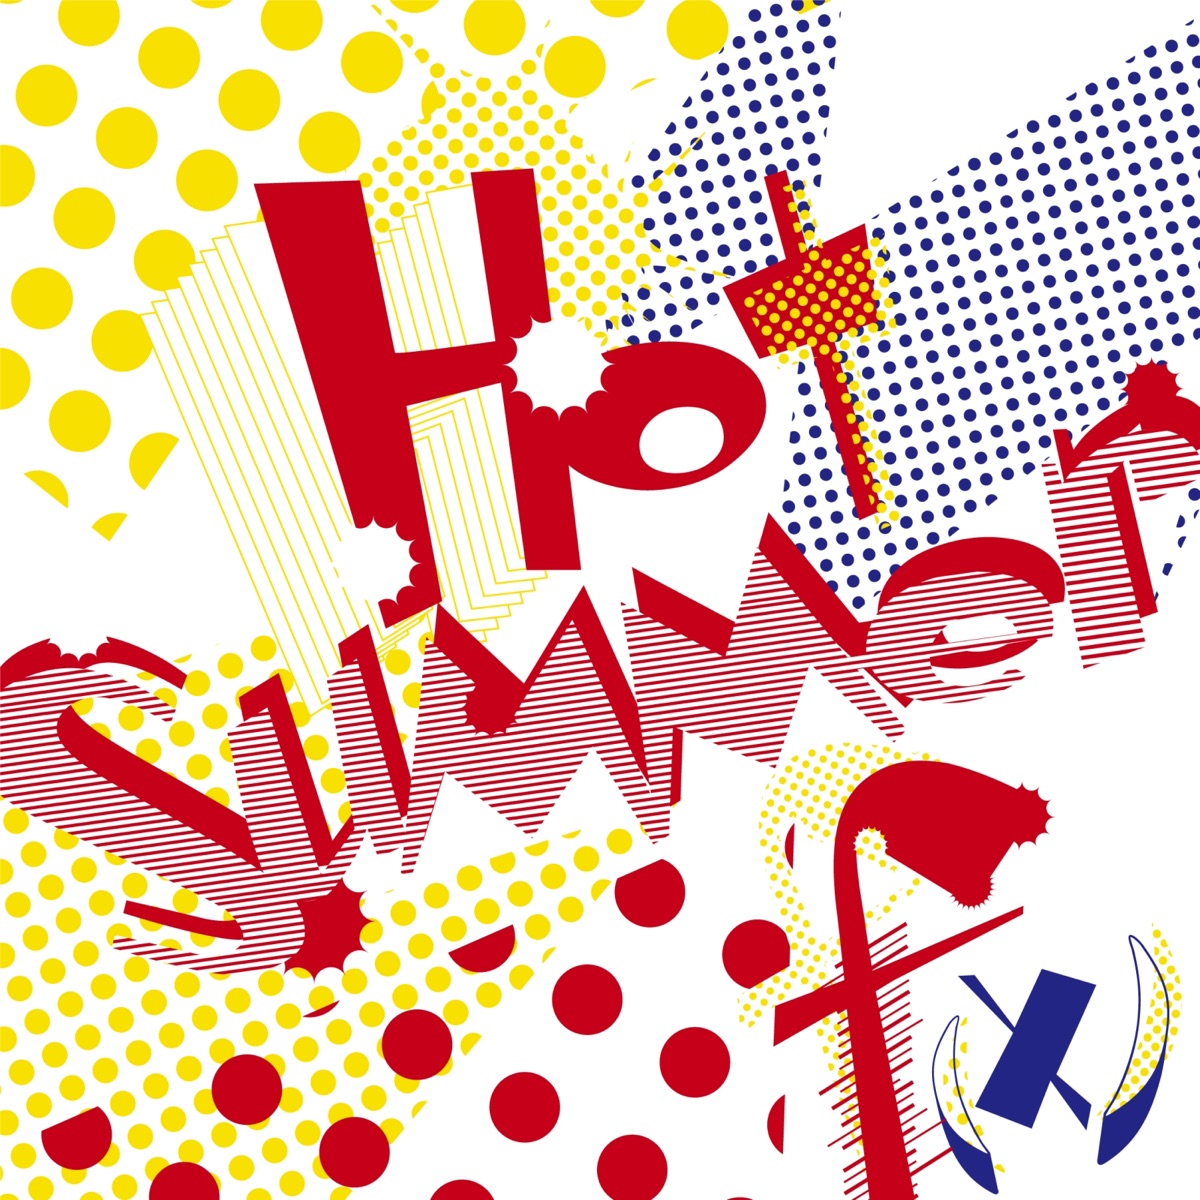 SUMMER SPECIAL Pinocchio/Hot Summer